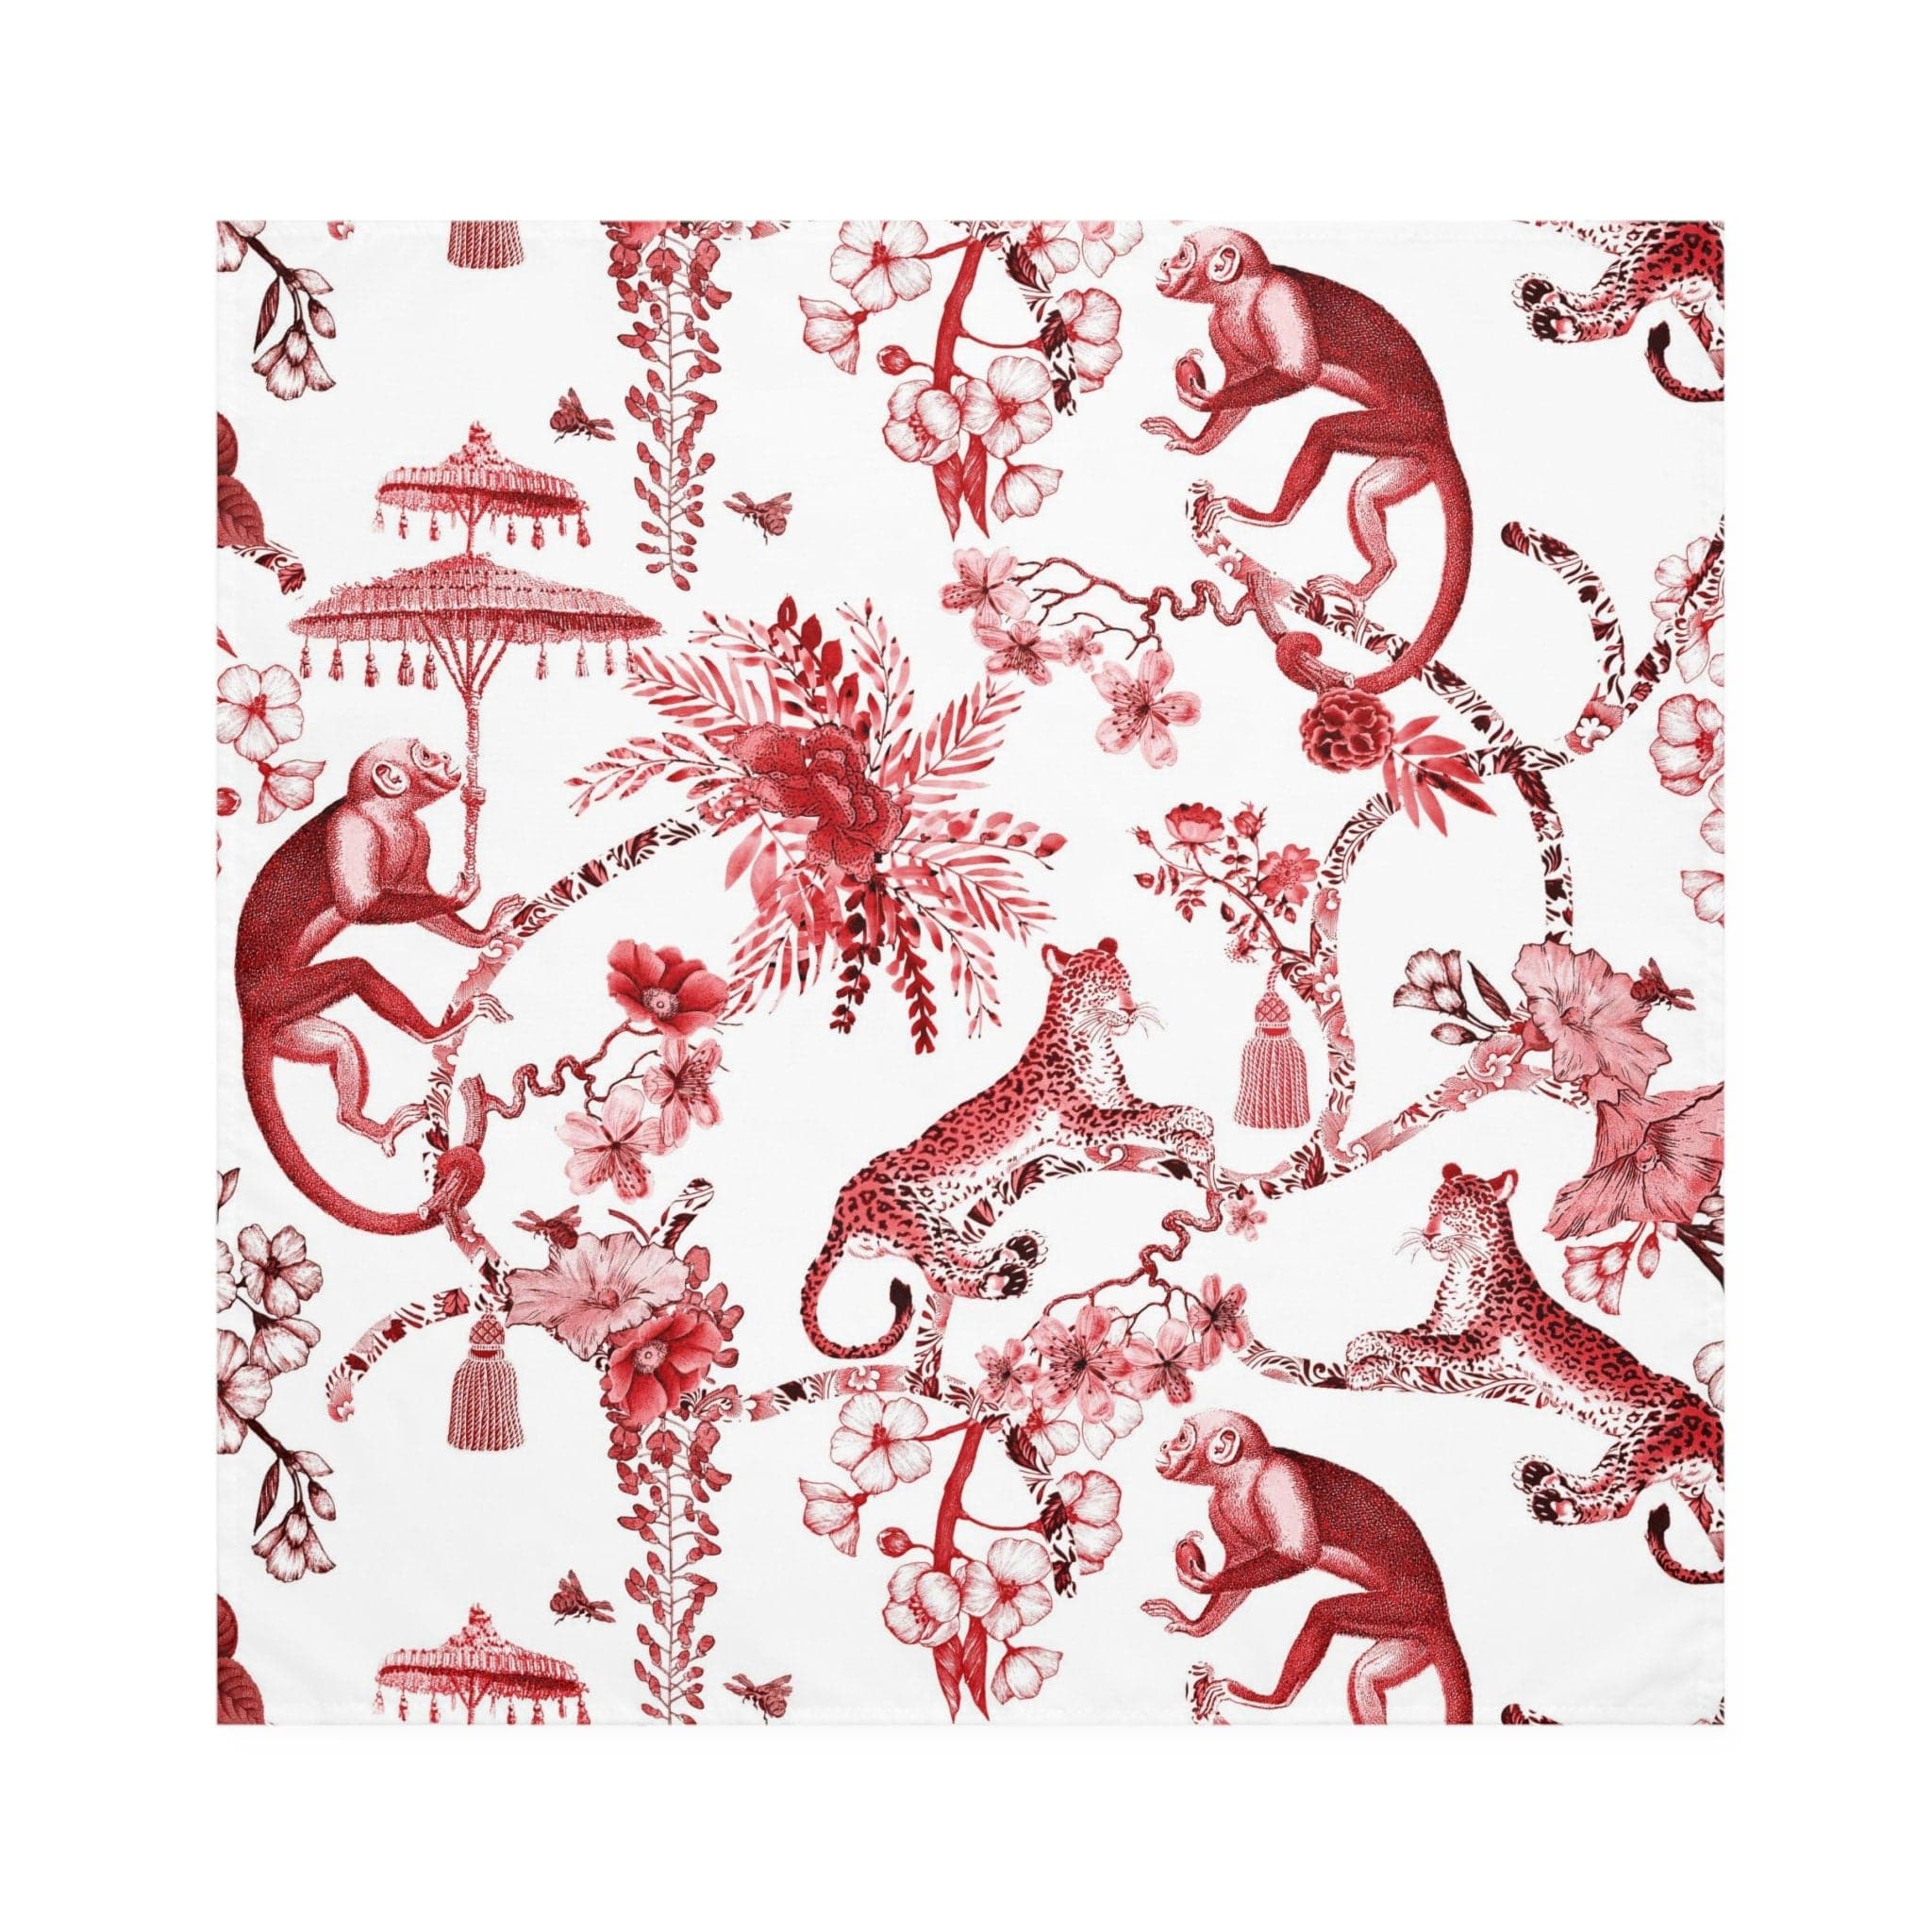 Kate McEnroe New York Set of 4 Chinoiserie Jungle Botanical Toile Cloth Napkins, Red, White Chinoiserie Floral Table Linens, Country Farmhouse Decor - 131682623 Napkins 61400841615176268880